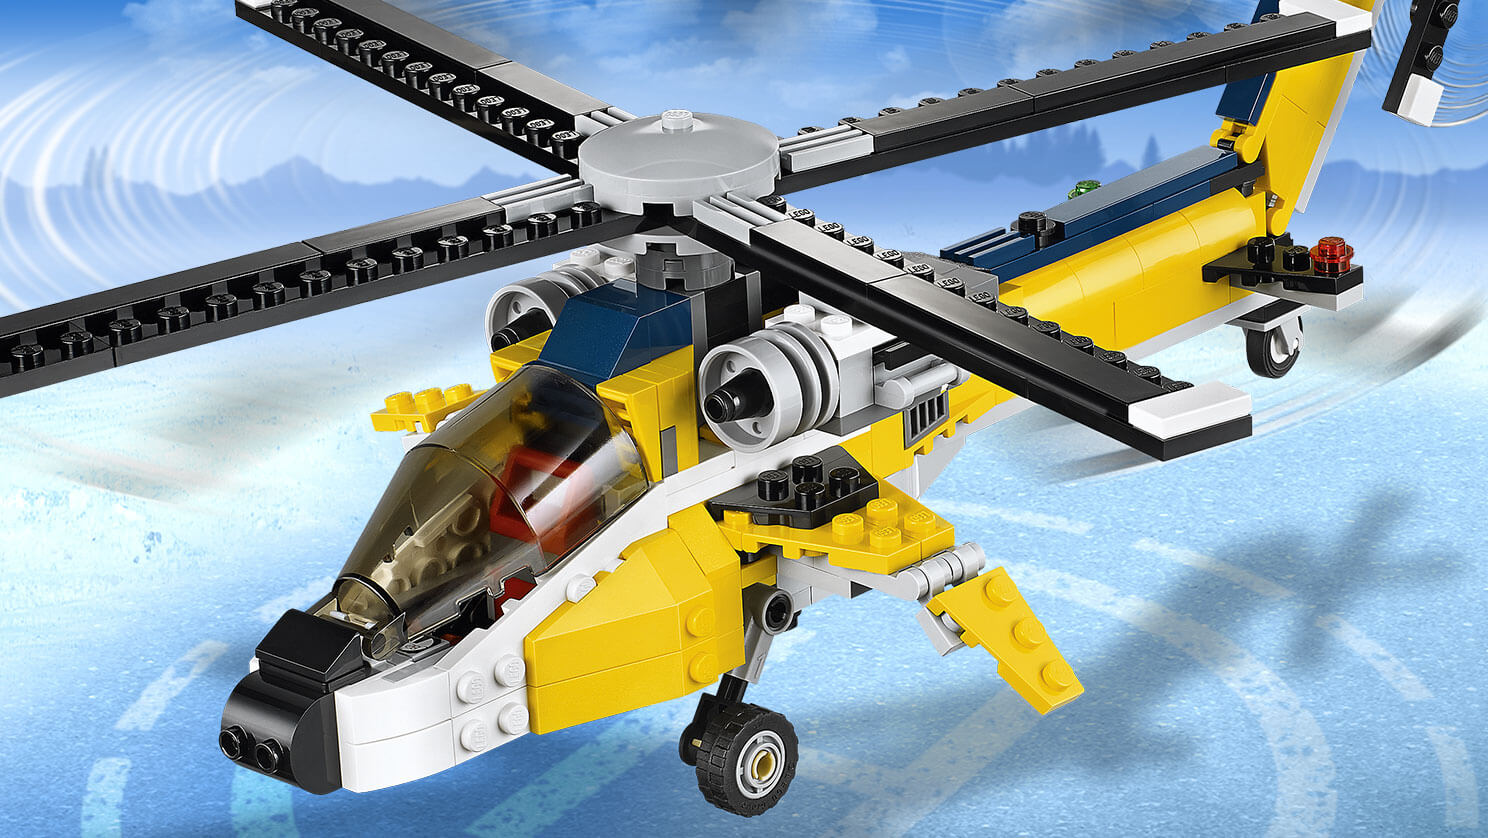 tørst jordskælv Haiku Yellow Racers 31023 - LEGO® Creator Sets - LEGO.com for kids